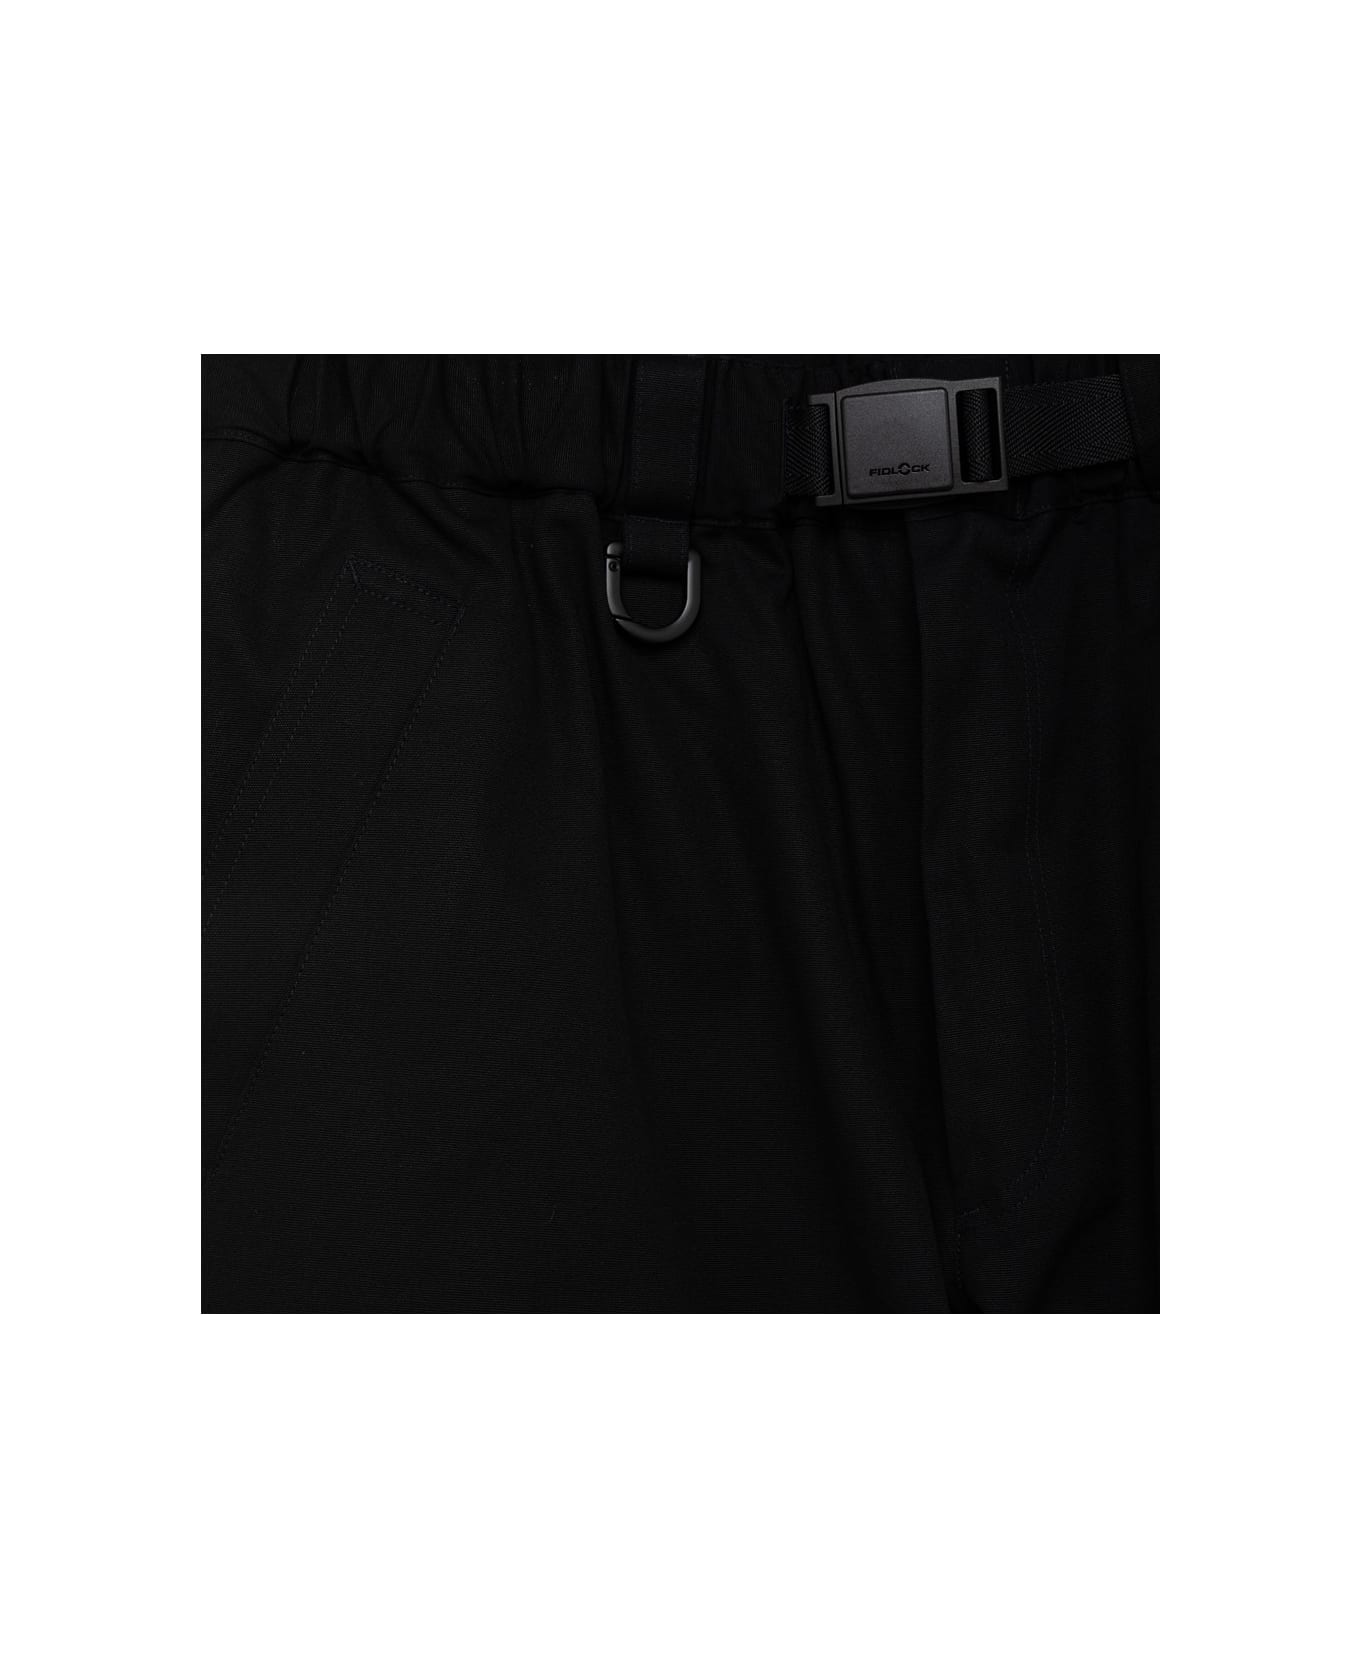 Y-3 Adidas- Gfx Wrkwr Pants Ip7949 - Black